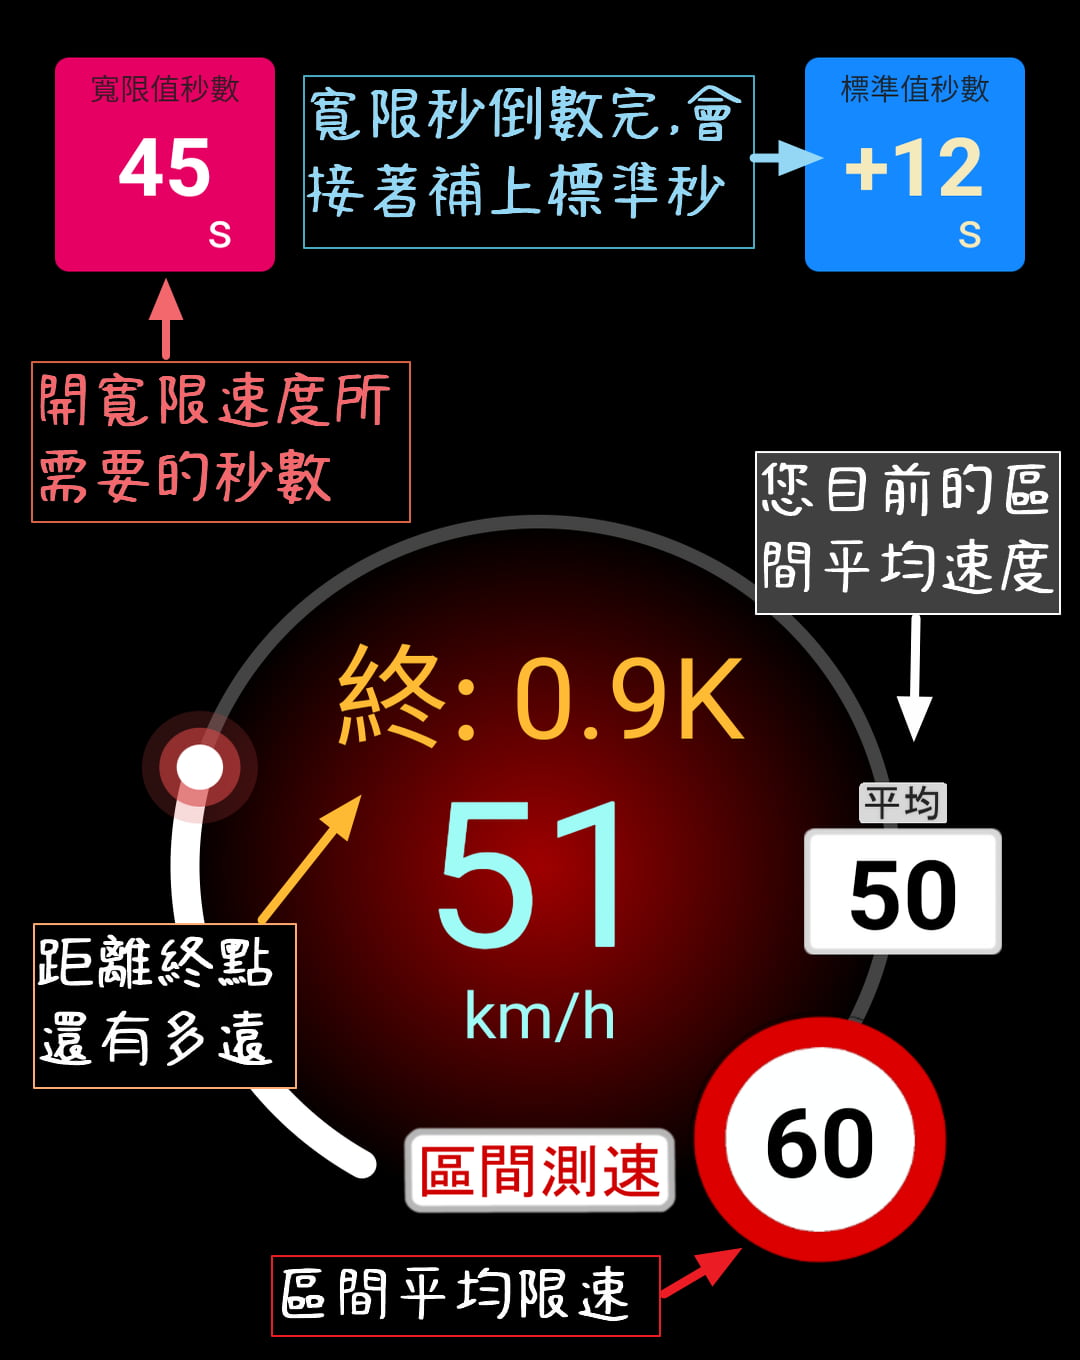 神盾測速照相Android畫面